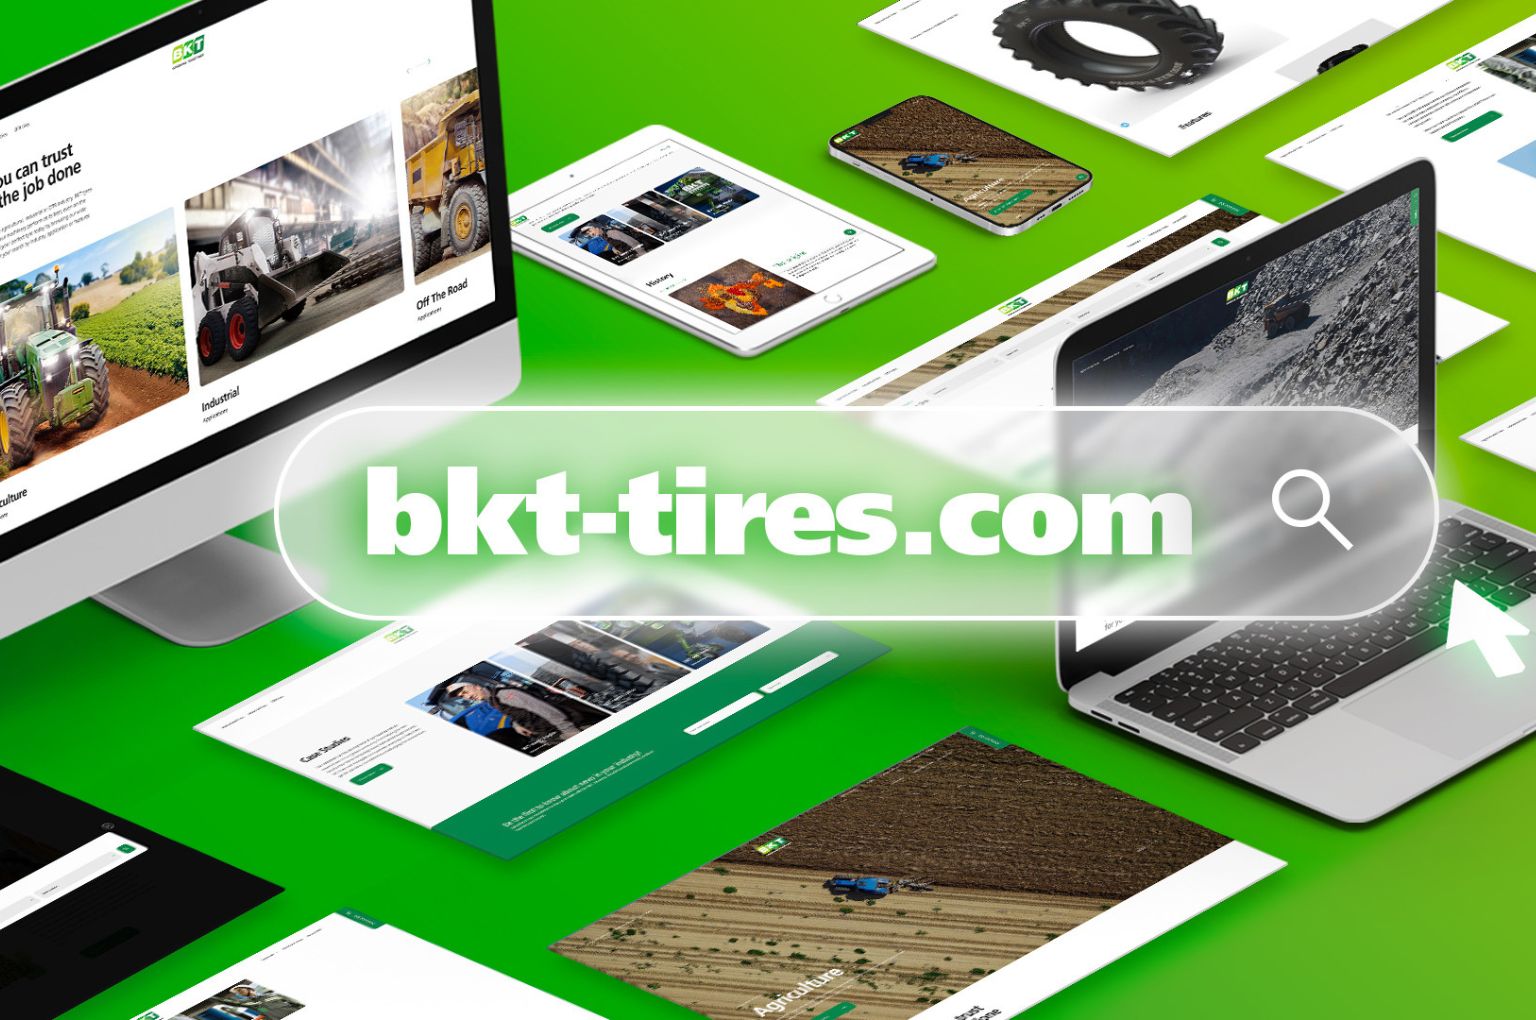 BKT launches new interactive website